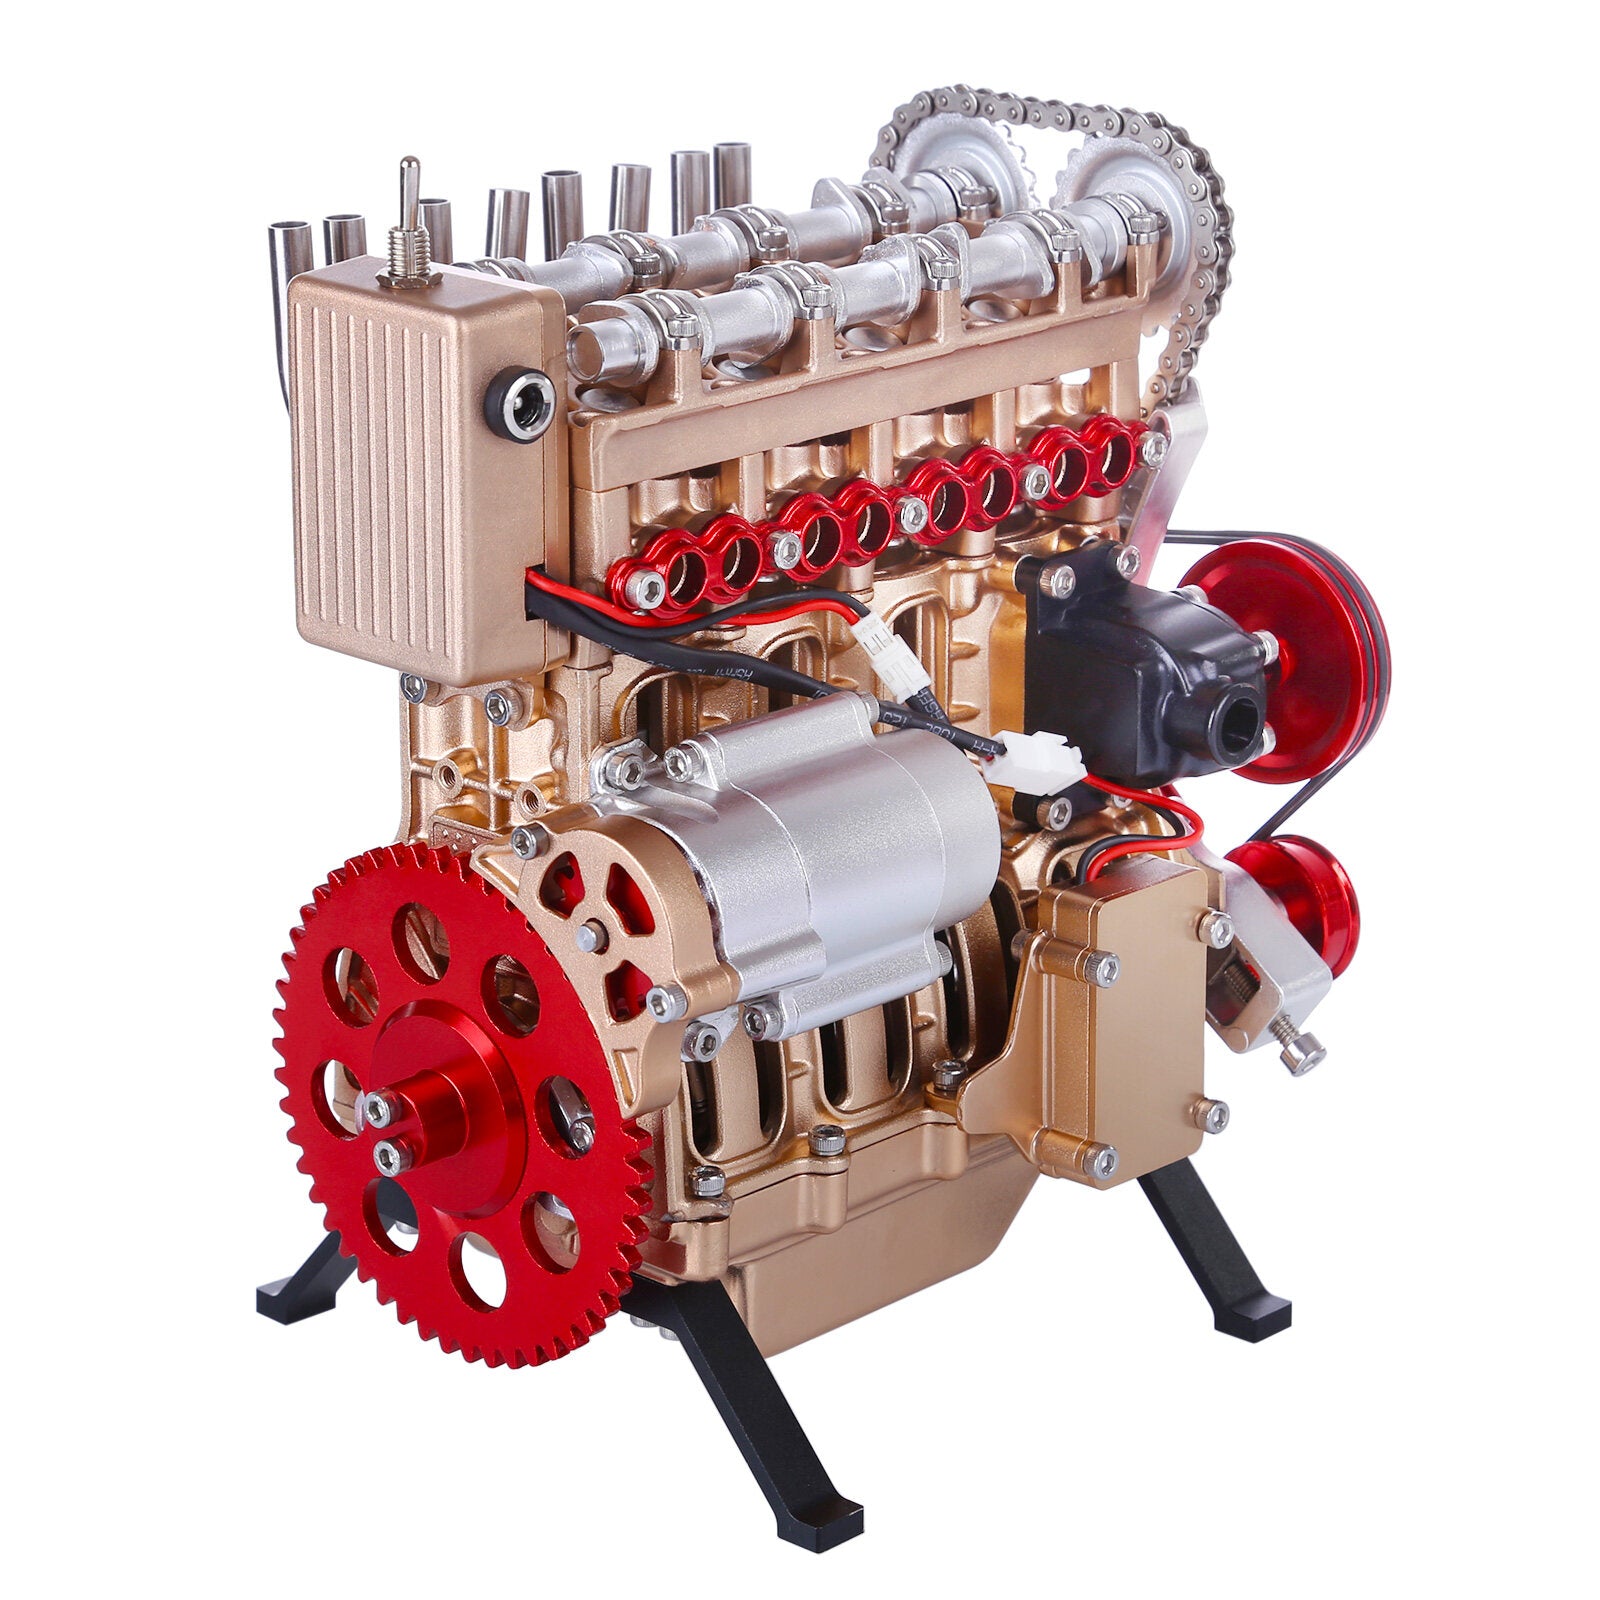 TECHING L4 Motor Modellbausatz, Der Funktioniert - 364 Teile 10